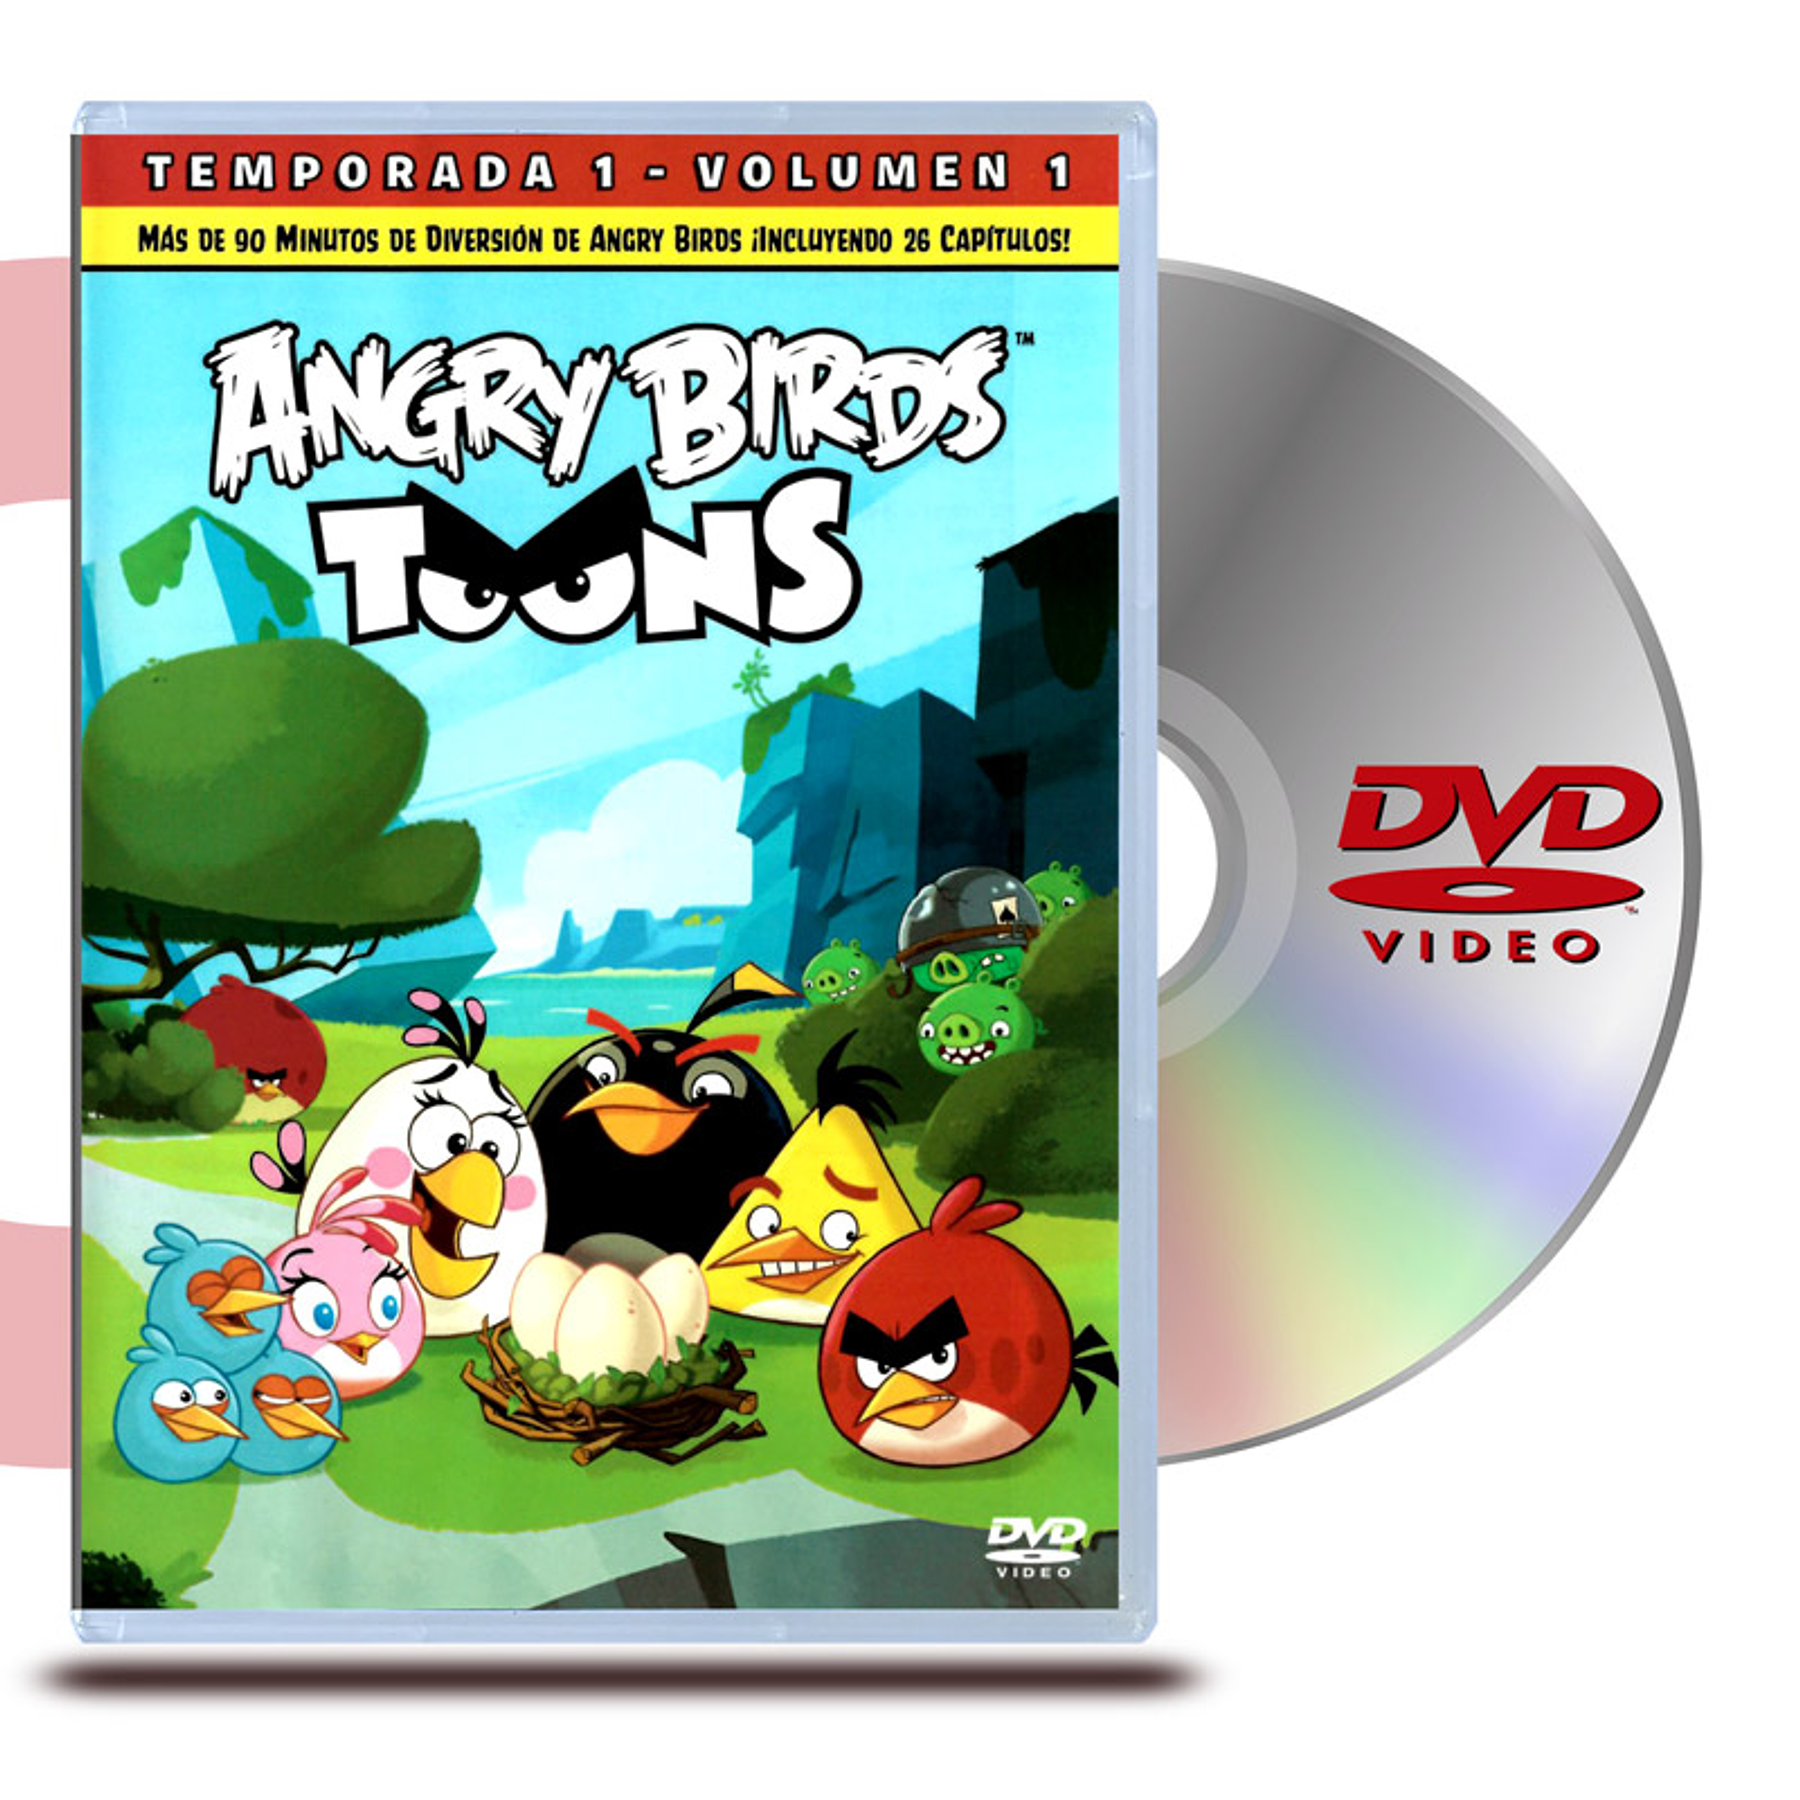 DVD ANGRY BIRDS : TEMP 1 - VOL 1